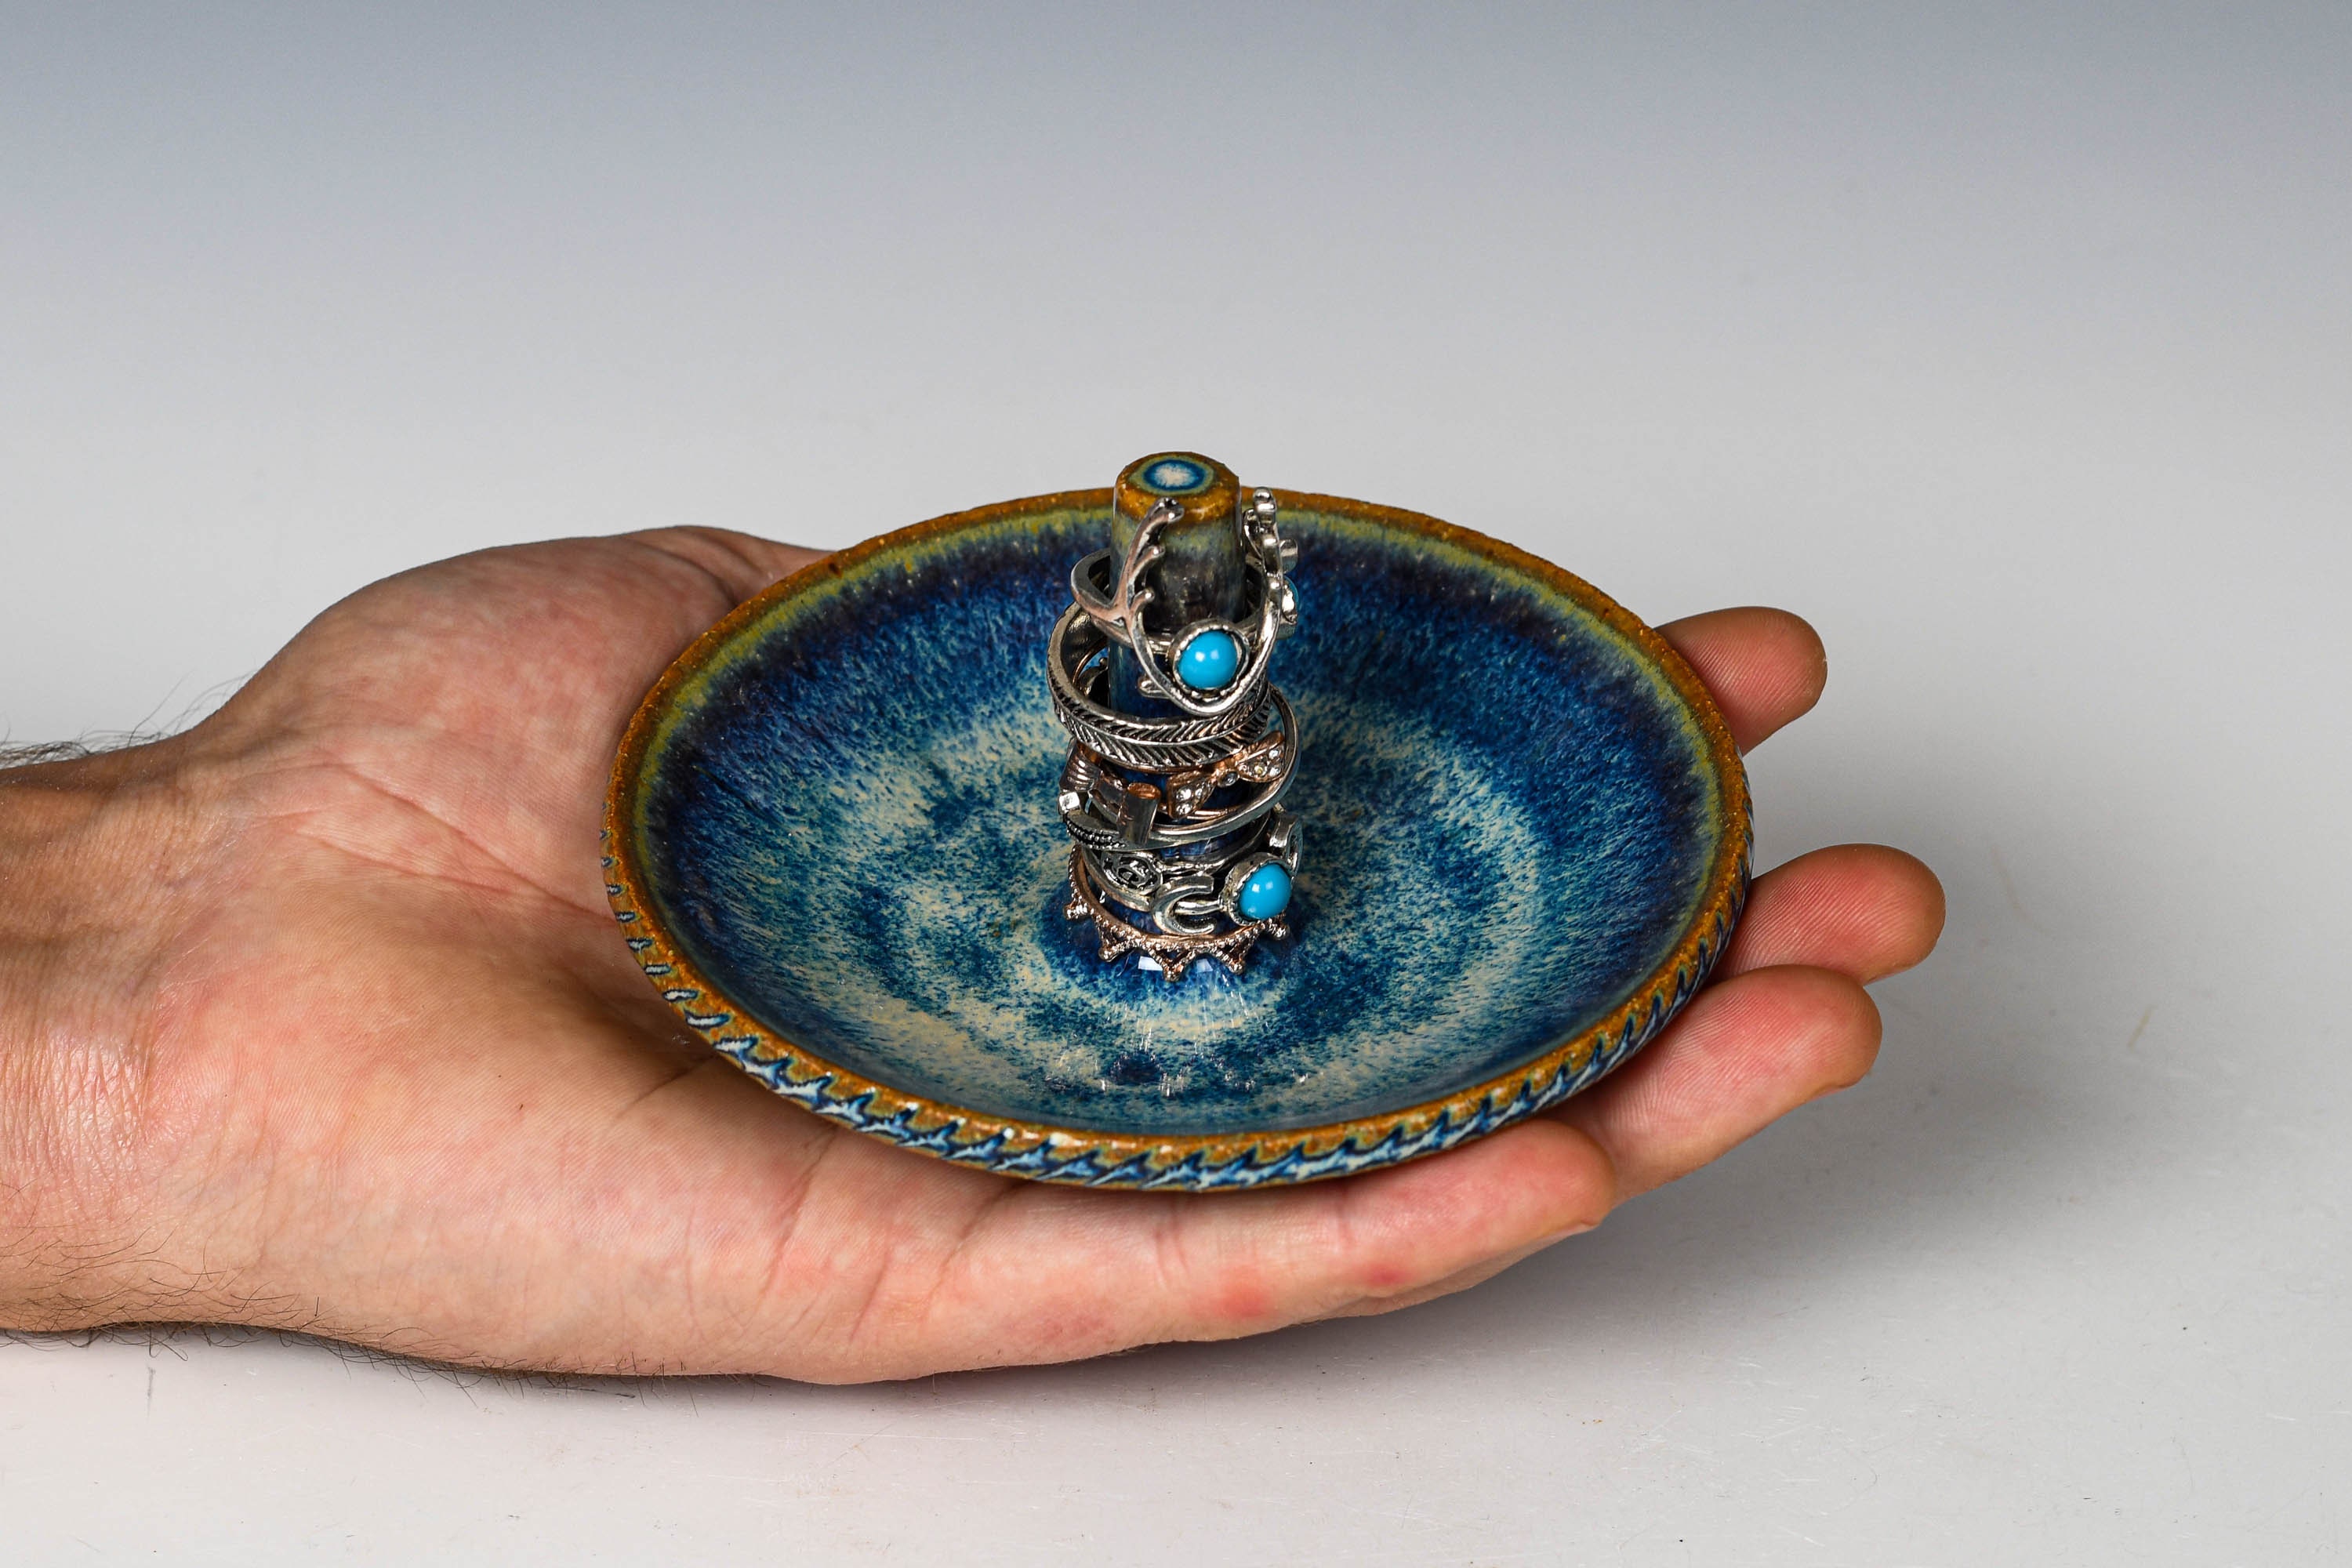 Vintage Hand Reproduction Handmade Ceramic Ring Holder Jewelry